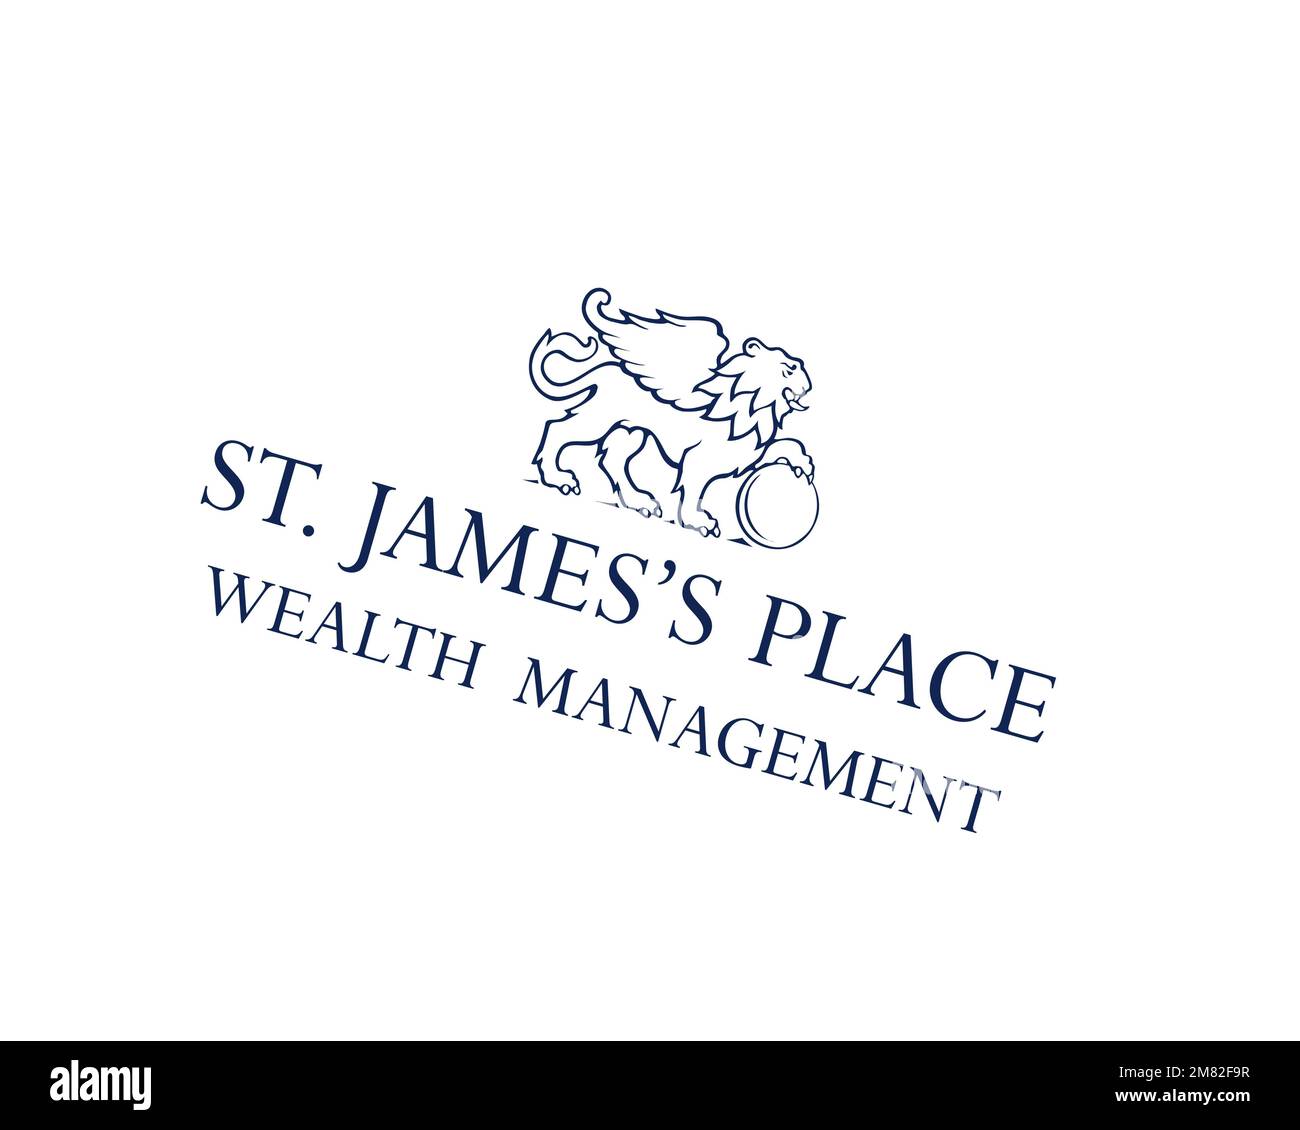 St James's Place plc, logo ruotato, sfondo bianco B Foto Stock